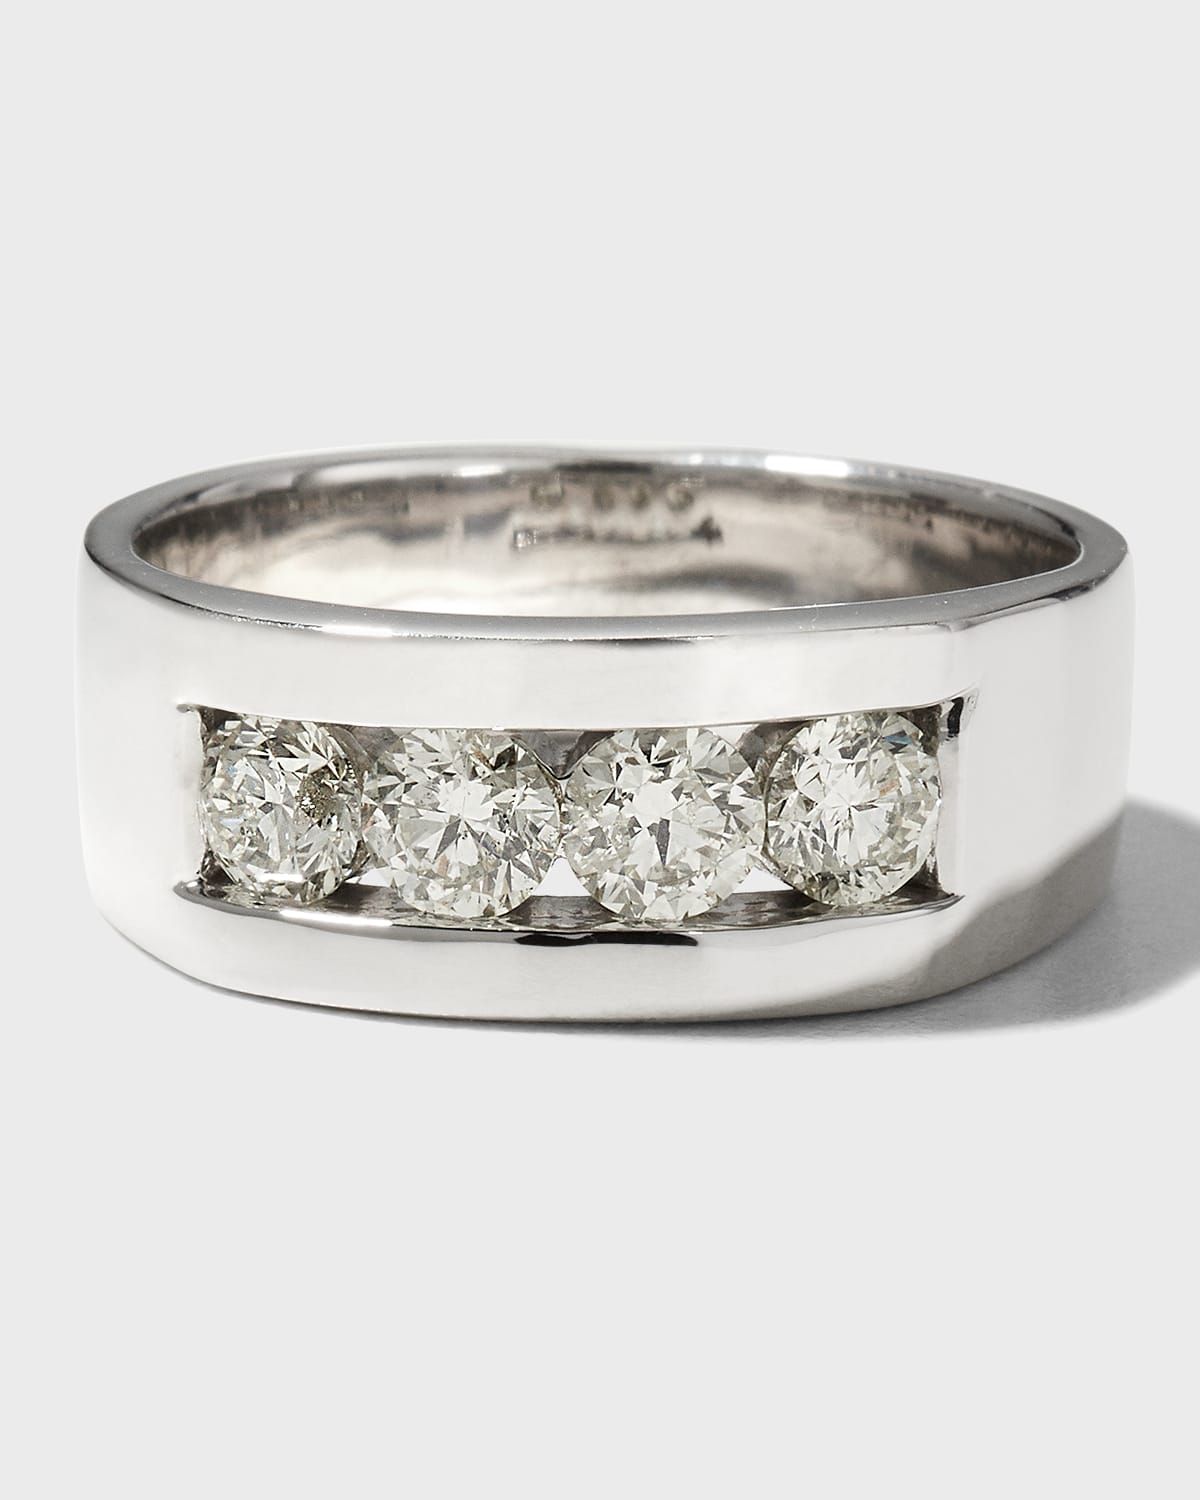 Dudee Design Cluster Charm Zircon Crystal Women eternity ring women fashion rings